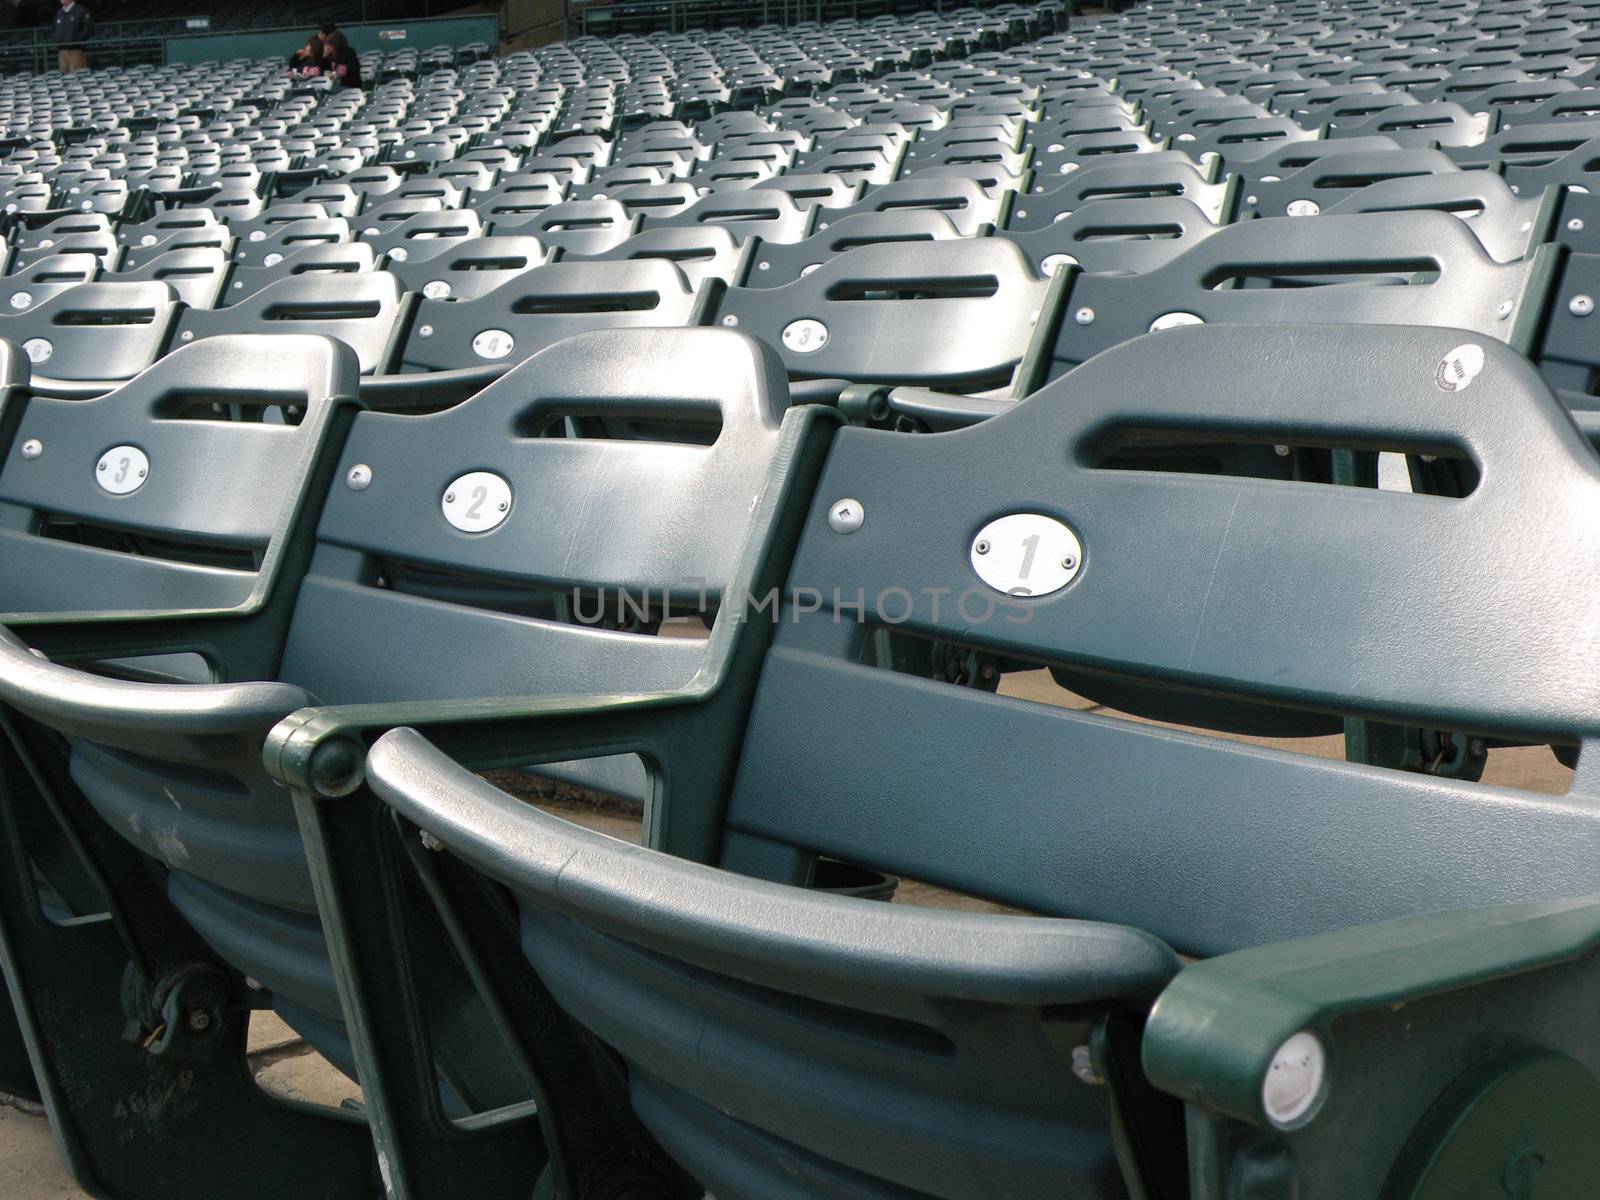 empty stadium seats by photosbyrob